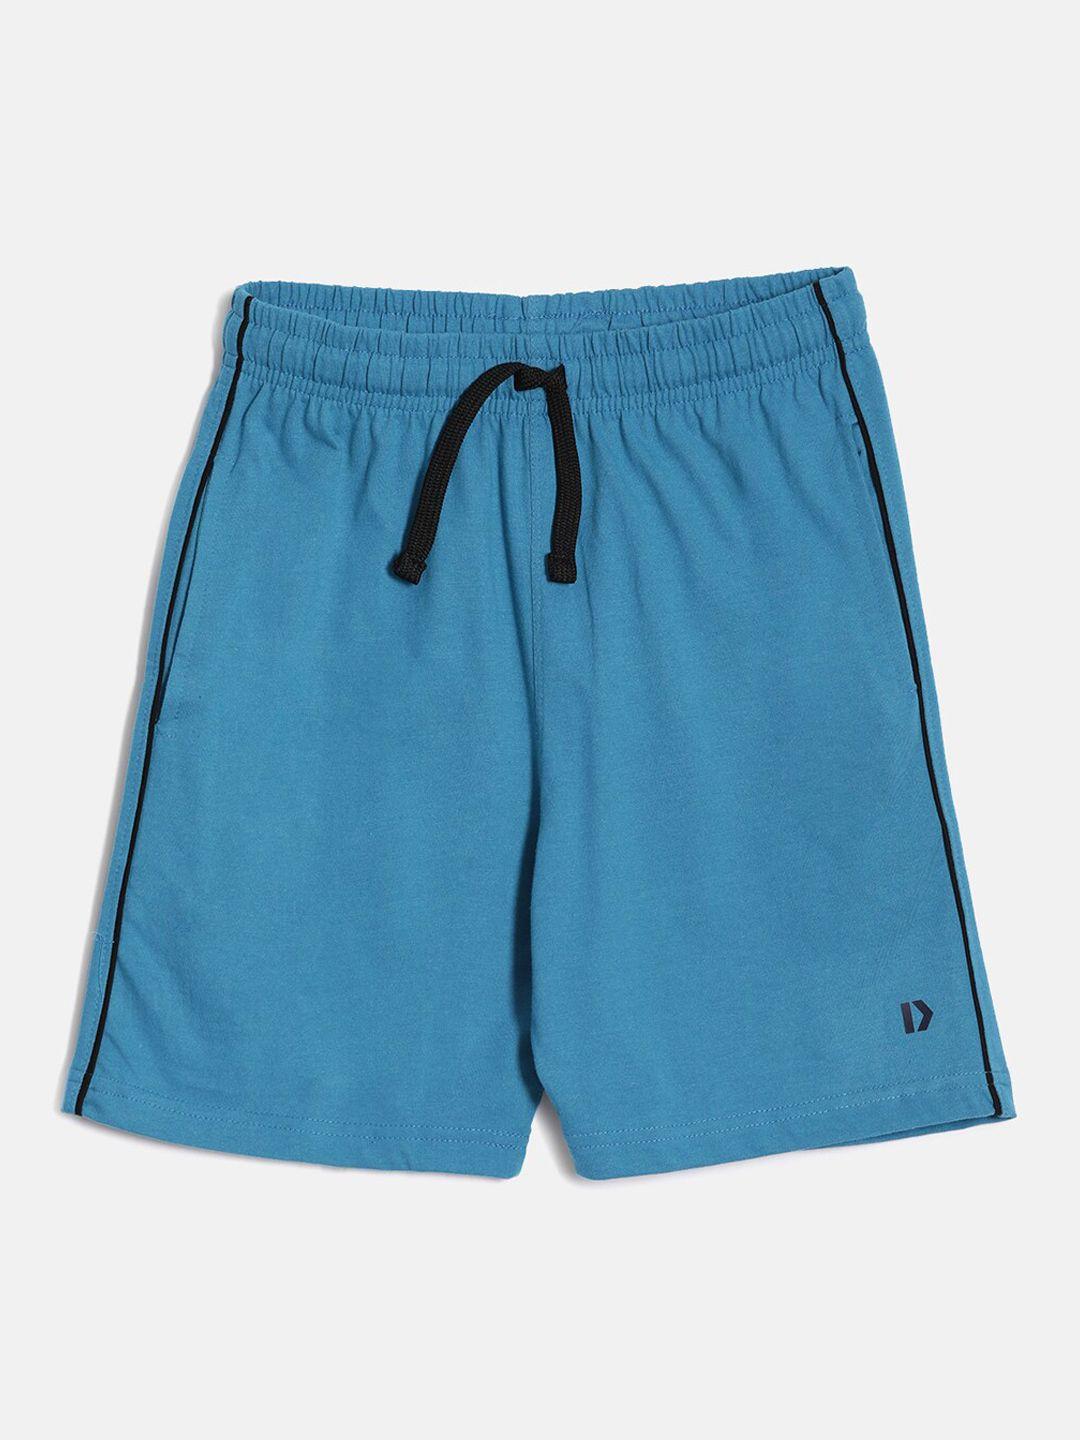 dixcy scott boys comfort fit mid-rise cotton shorts